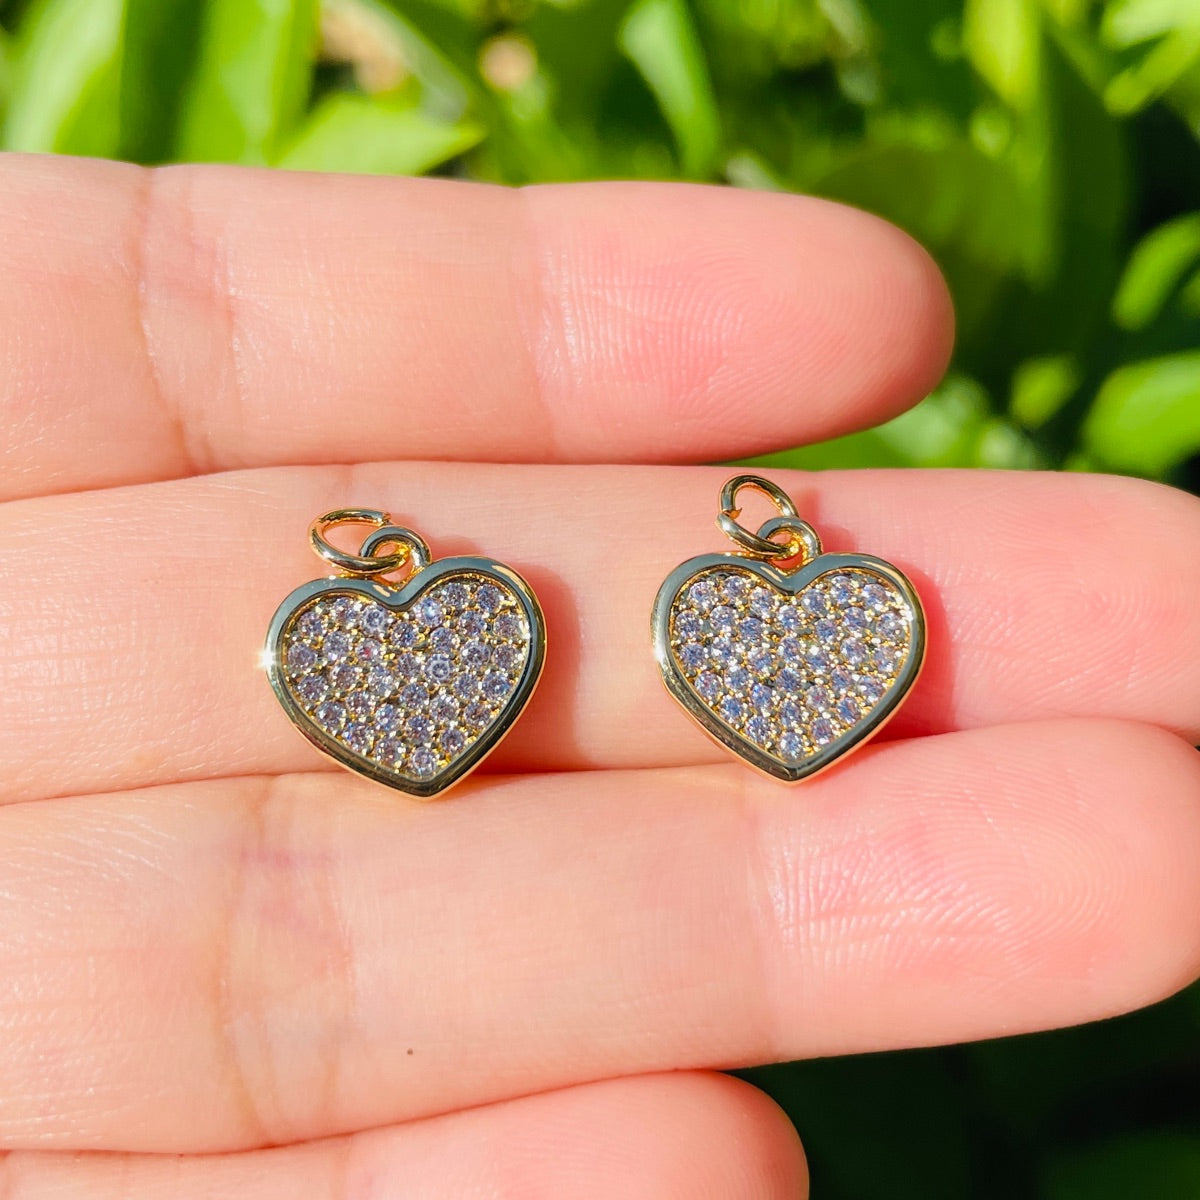 10pcs/lot 13mm Small Size CZ Paved Heart Charms CZ Paved Charms Hearts New Charms Arrivals Small Sizes Charms Beads Beyond